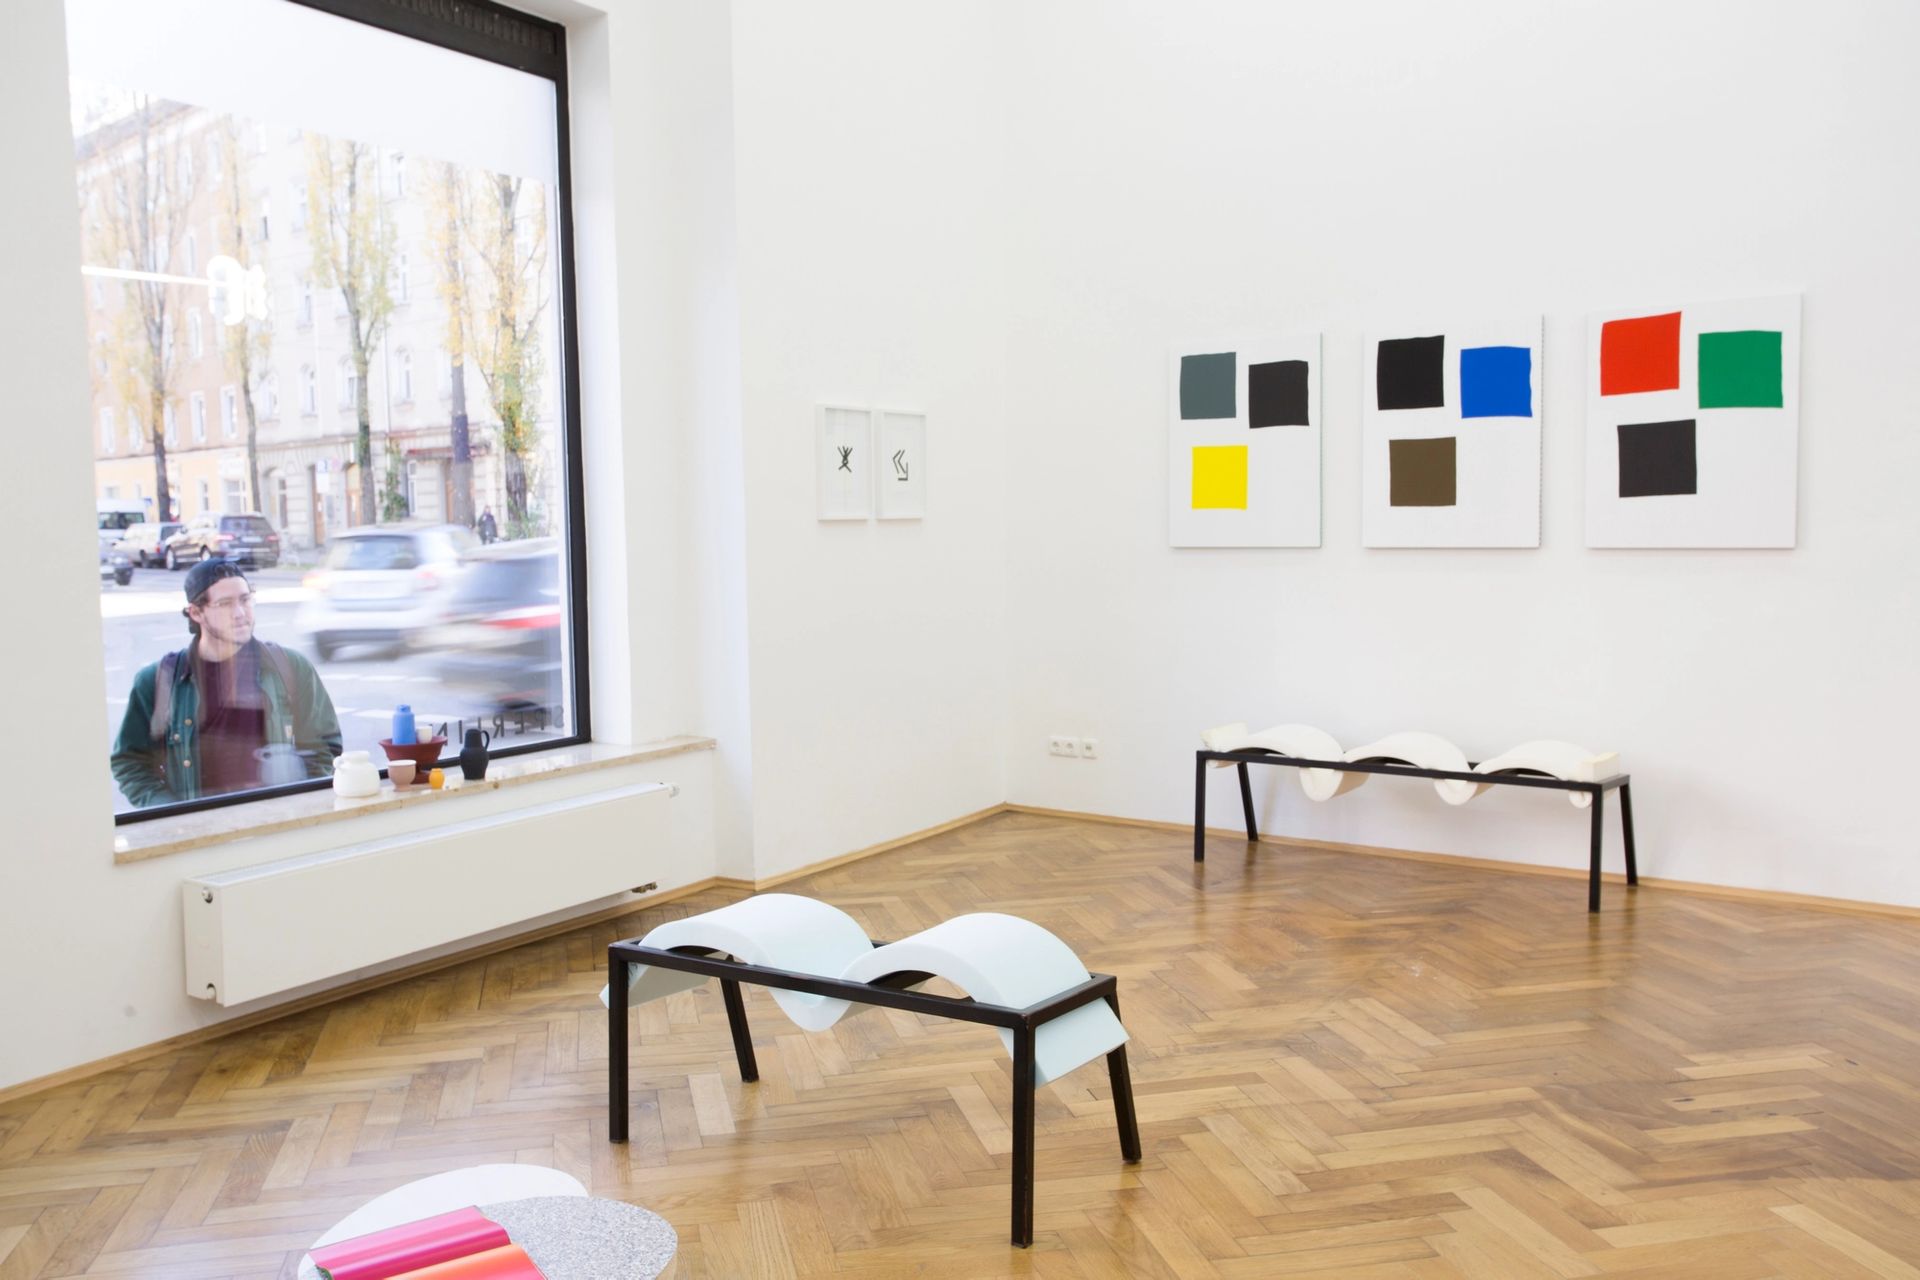 Installation view: Elvire Bonduelle, “waiting room #4”, 2015 (Francois Morellet, Nicolas Chardon, Elvire Bonduelle)